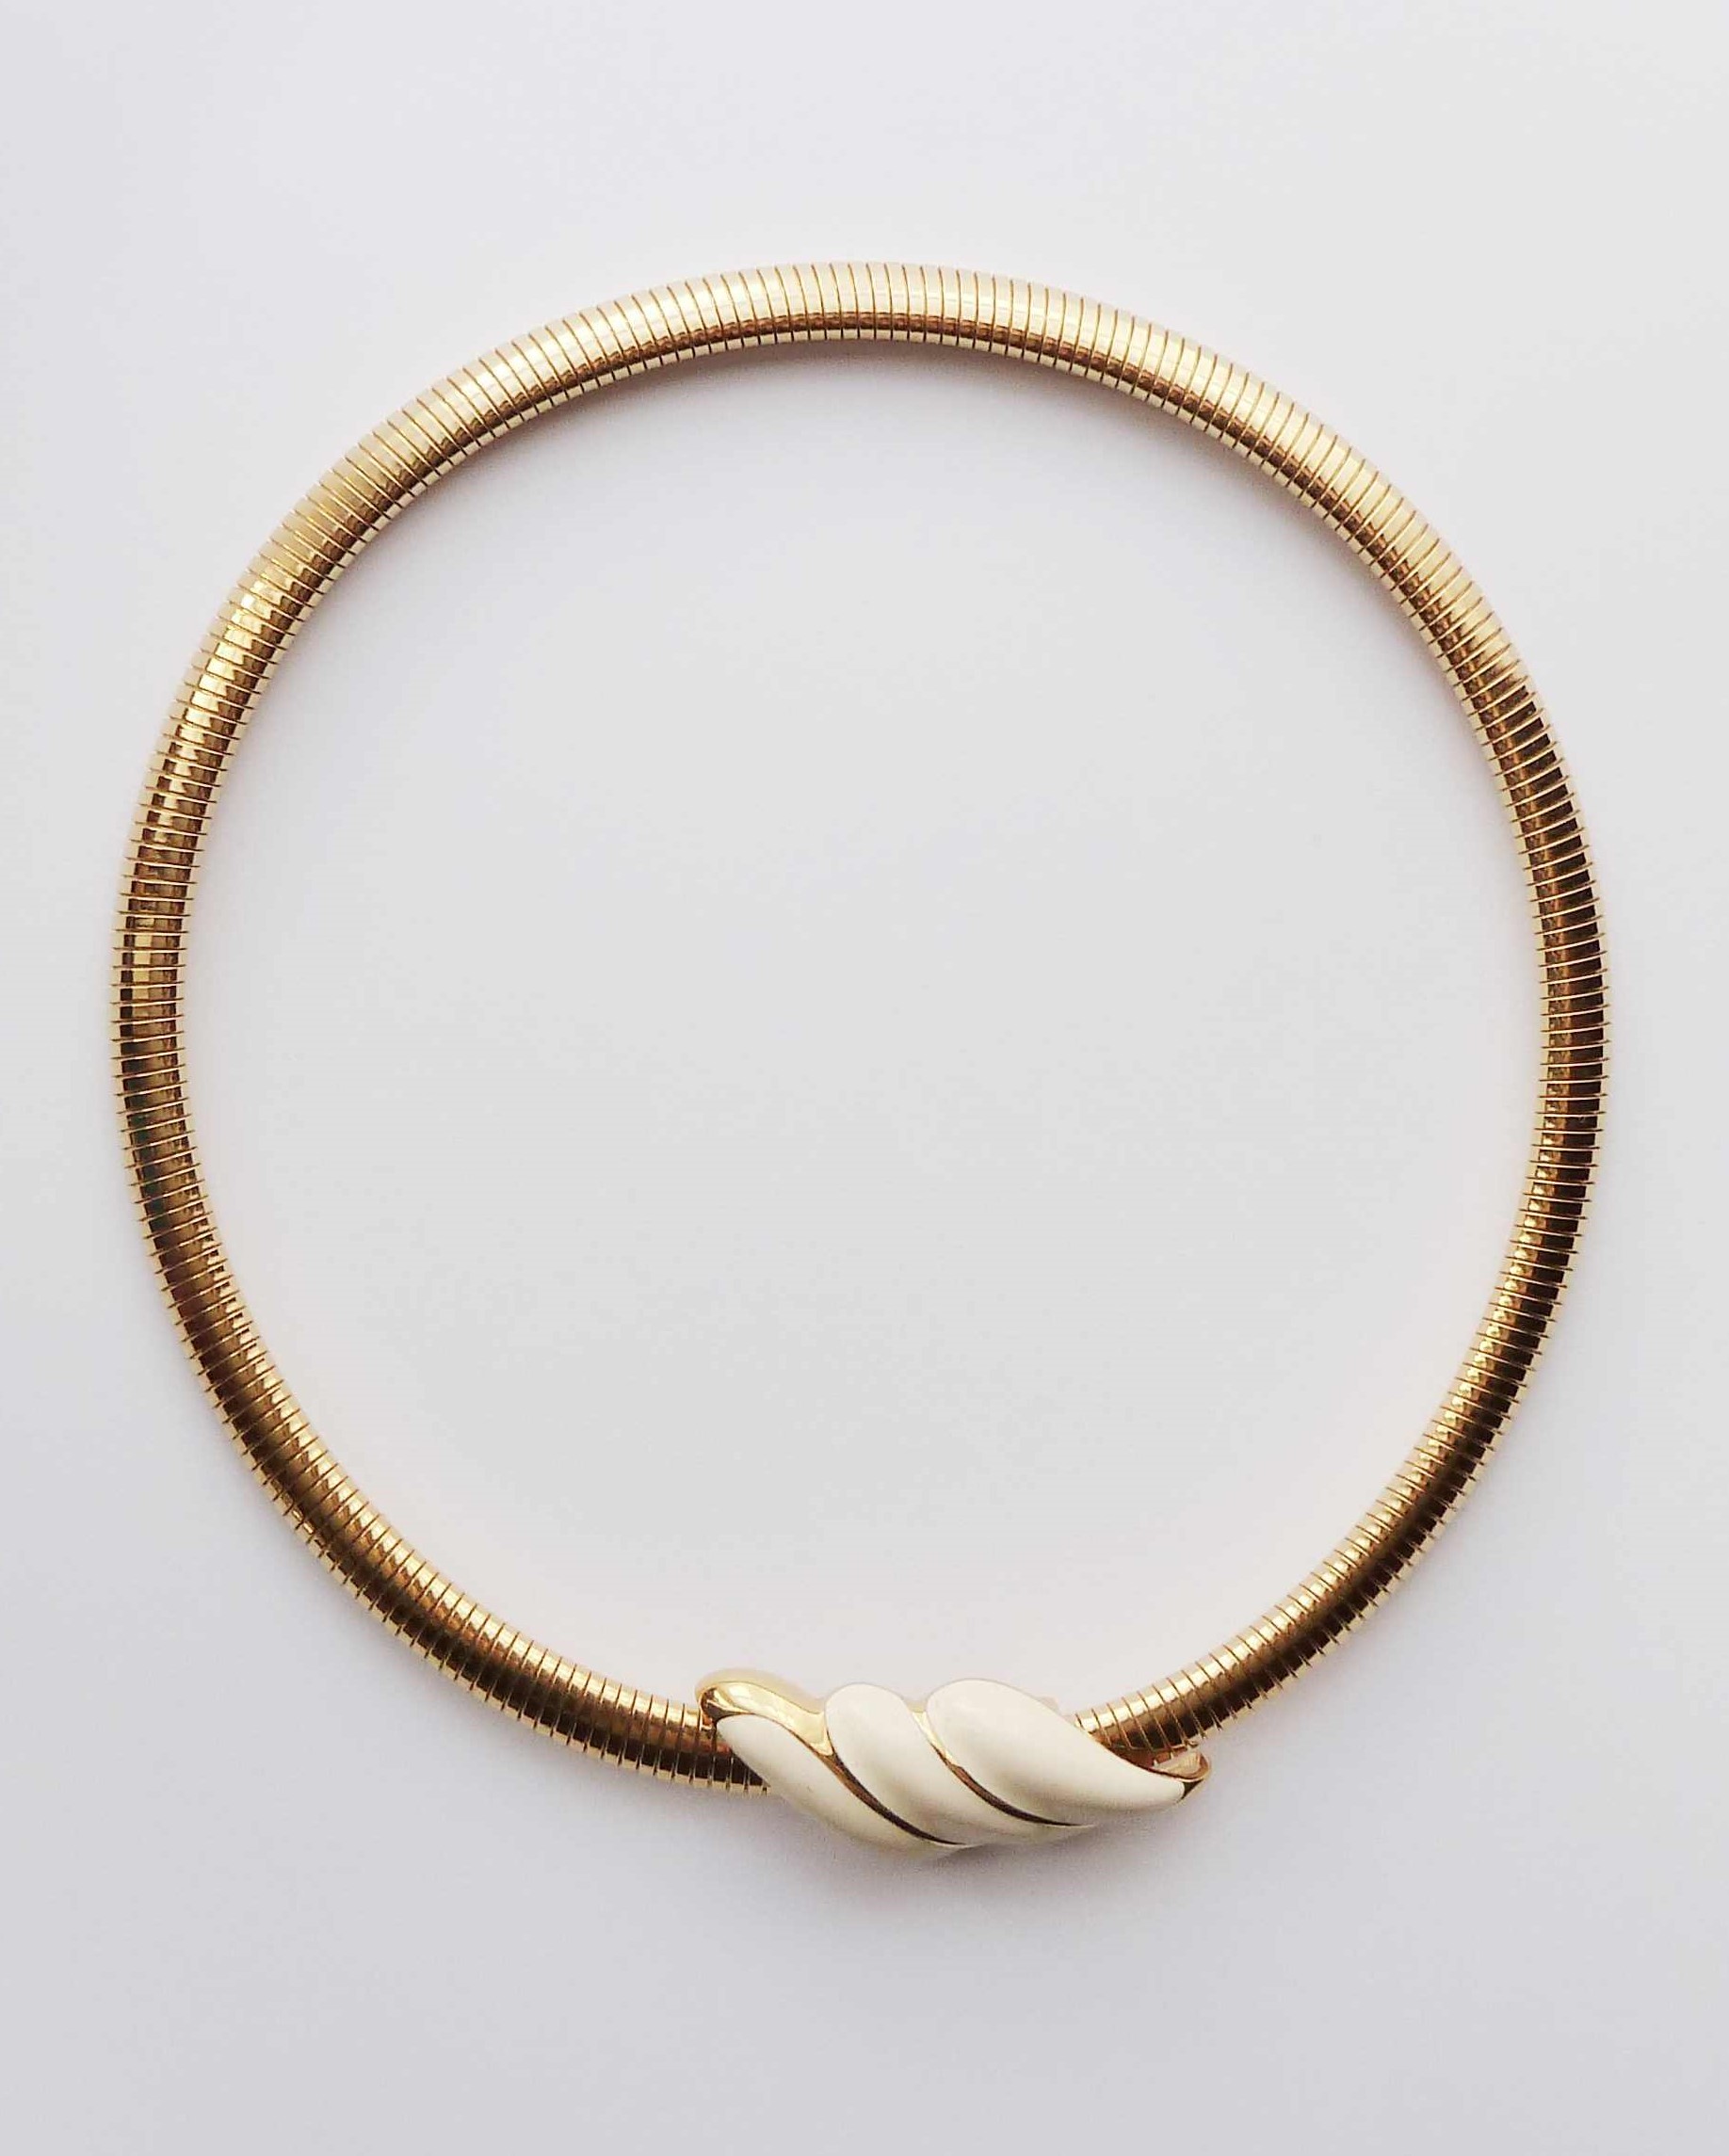 Monet snake chain white enamel vintage necklace